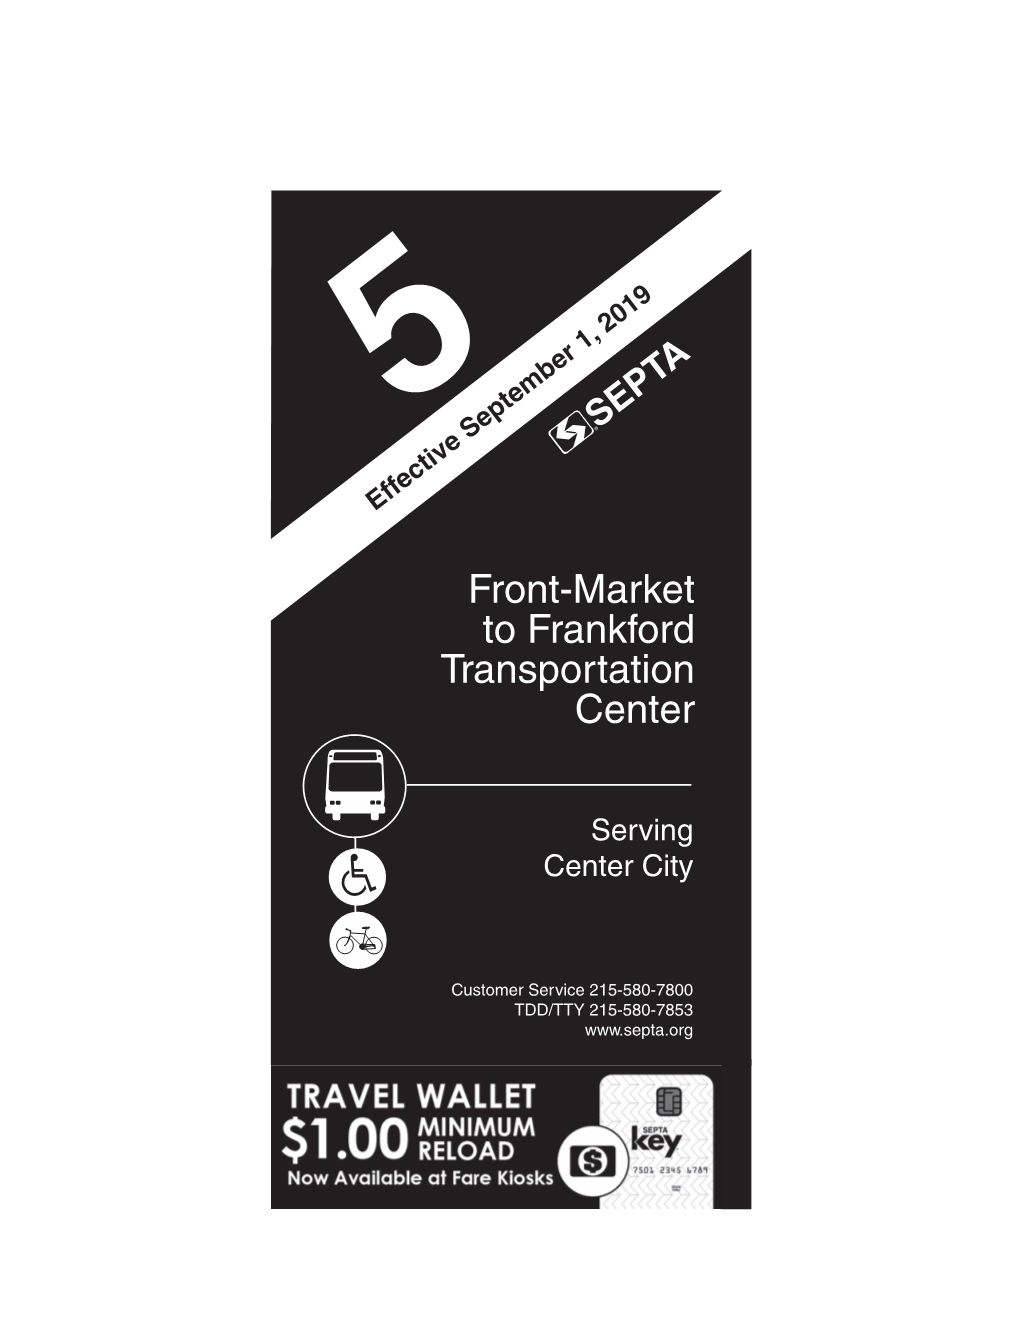 Front-Market to Frankford Transportation Center